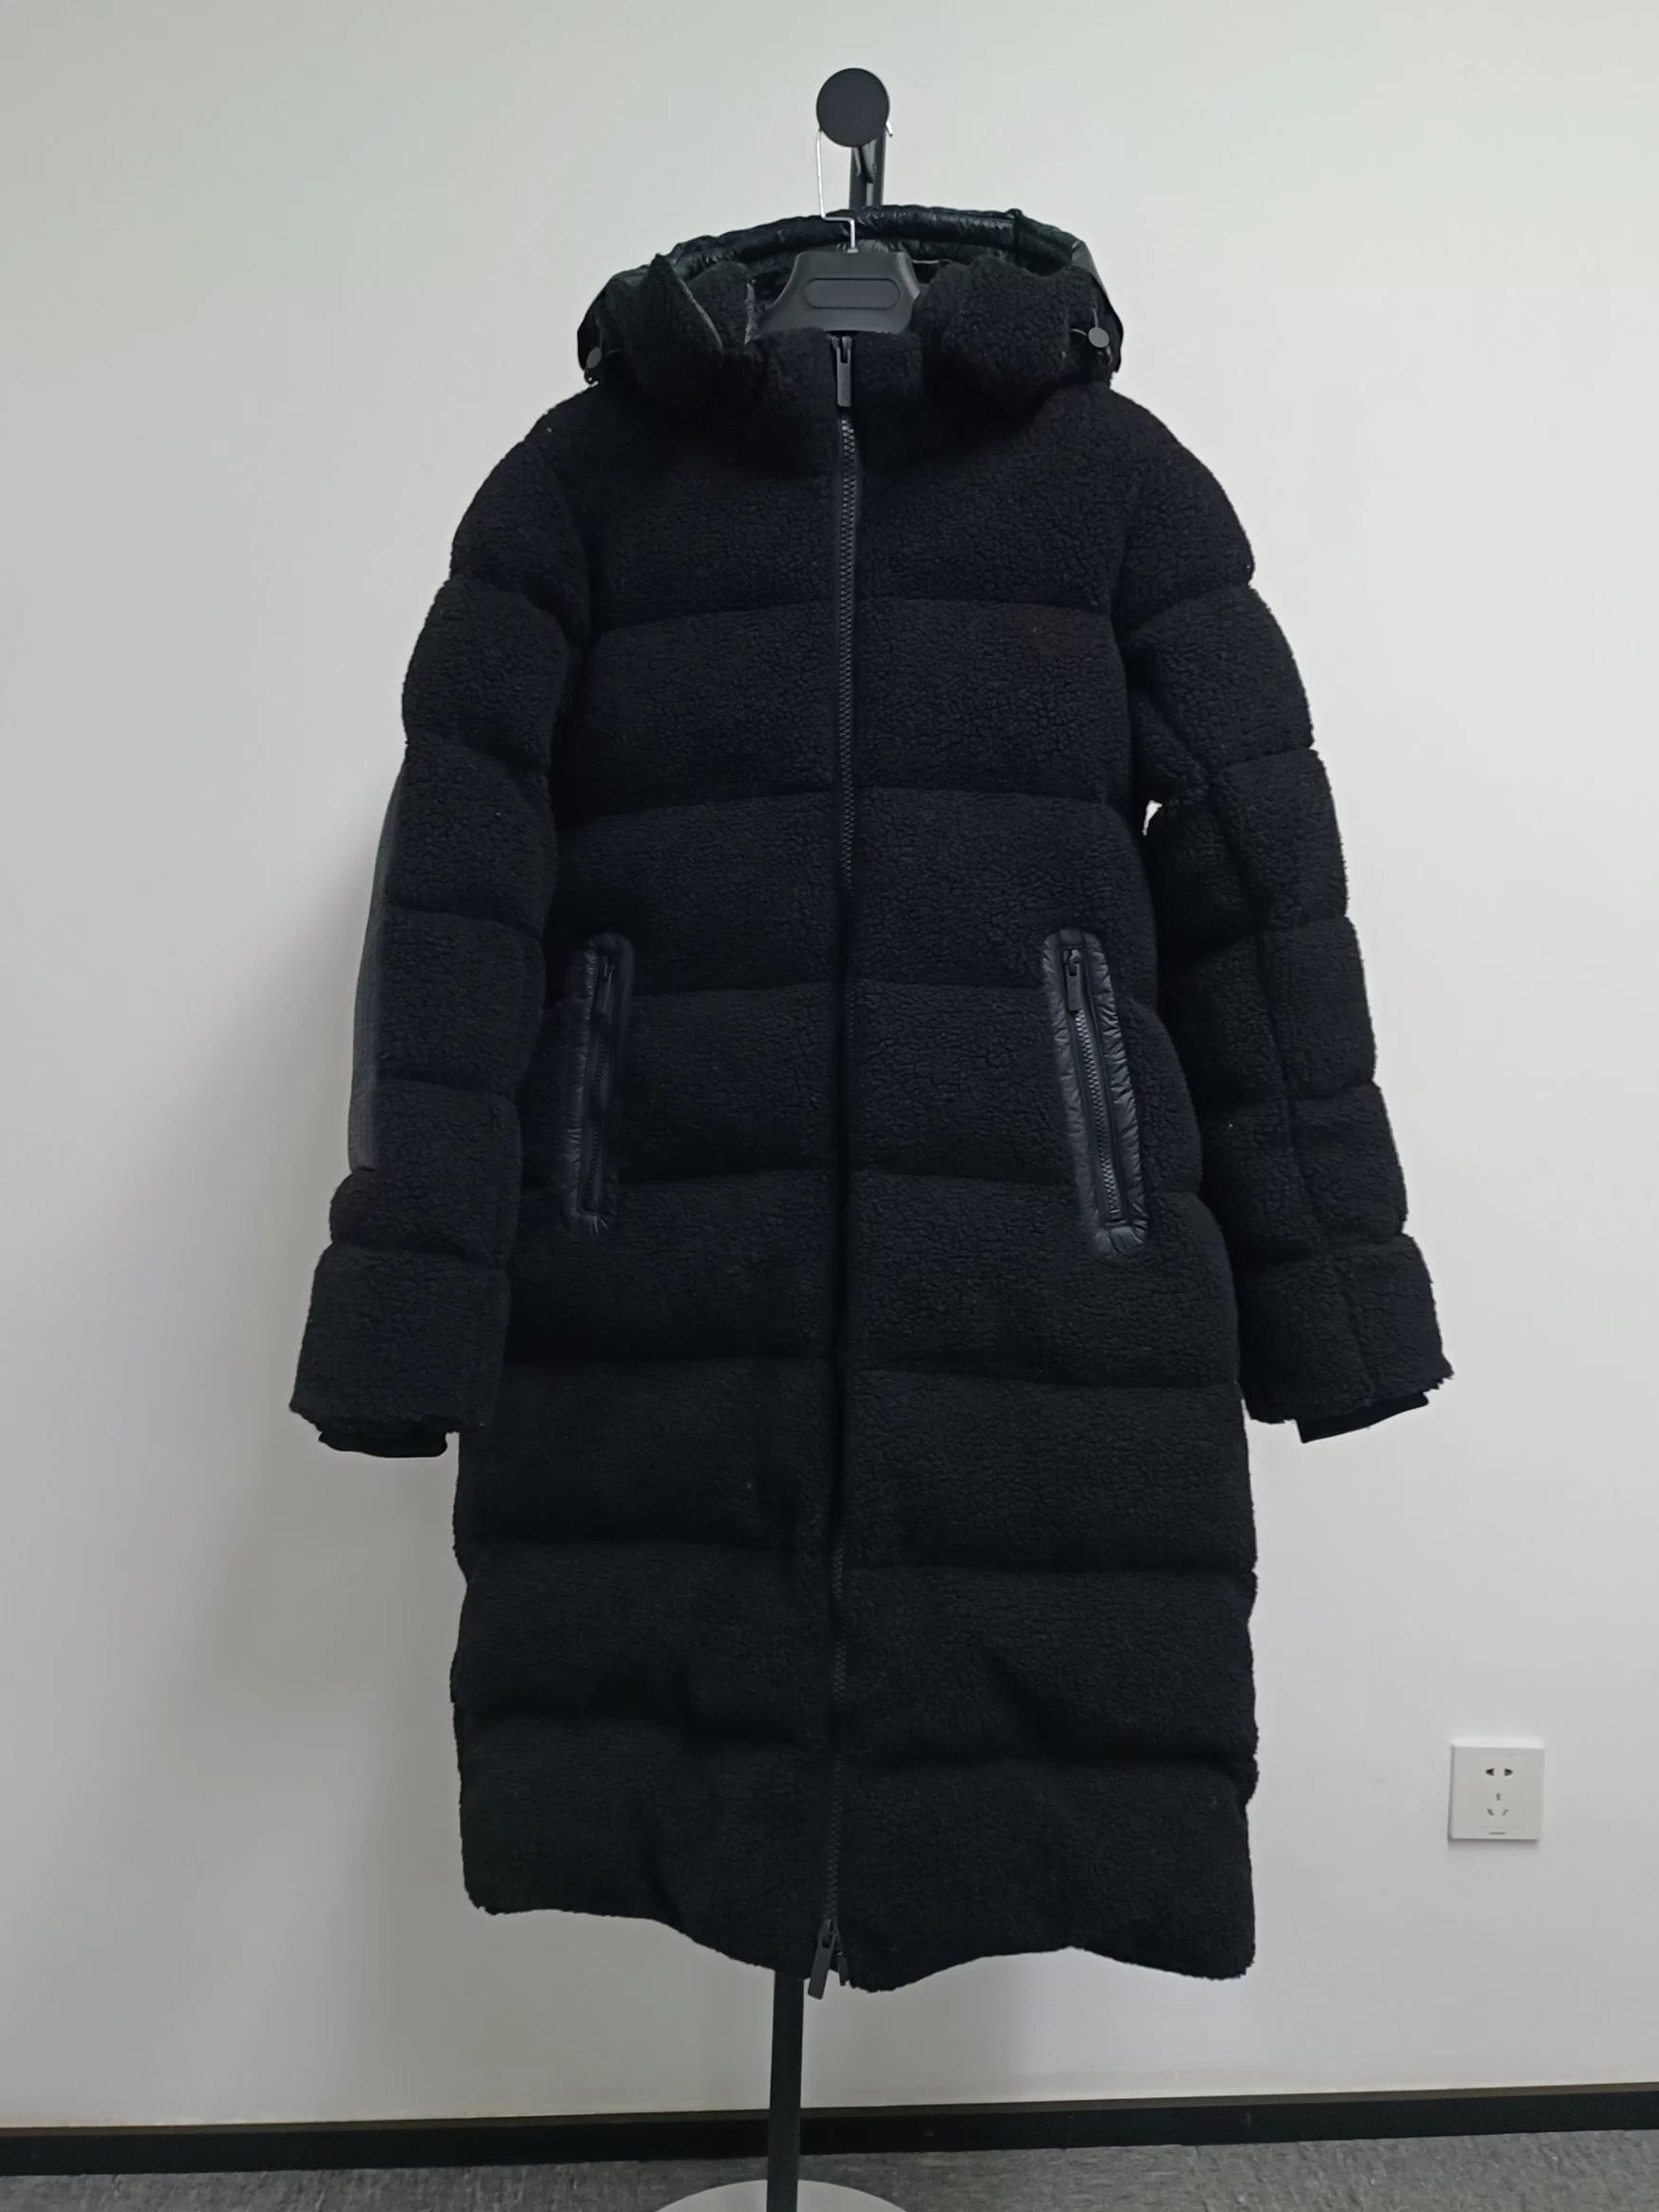 Puffer Jacket Woman Jacket Heavy Weight Jacket Winter Hooded Fleece Clothes